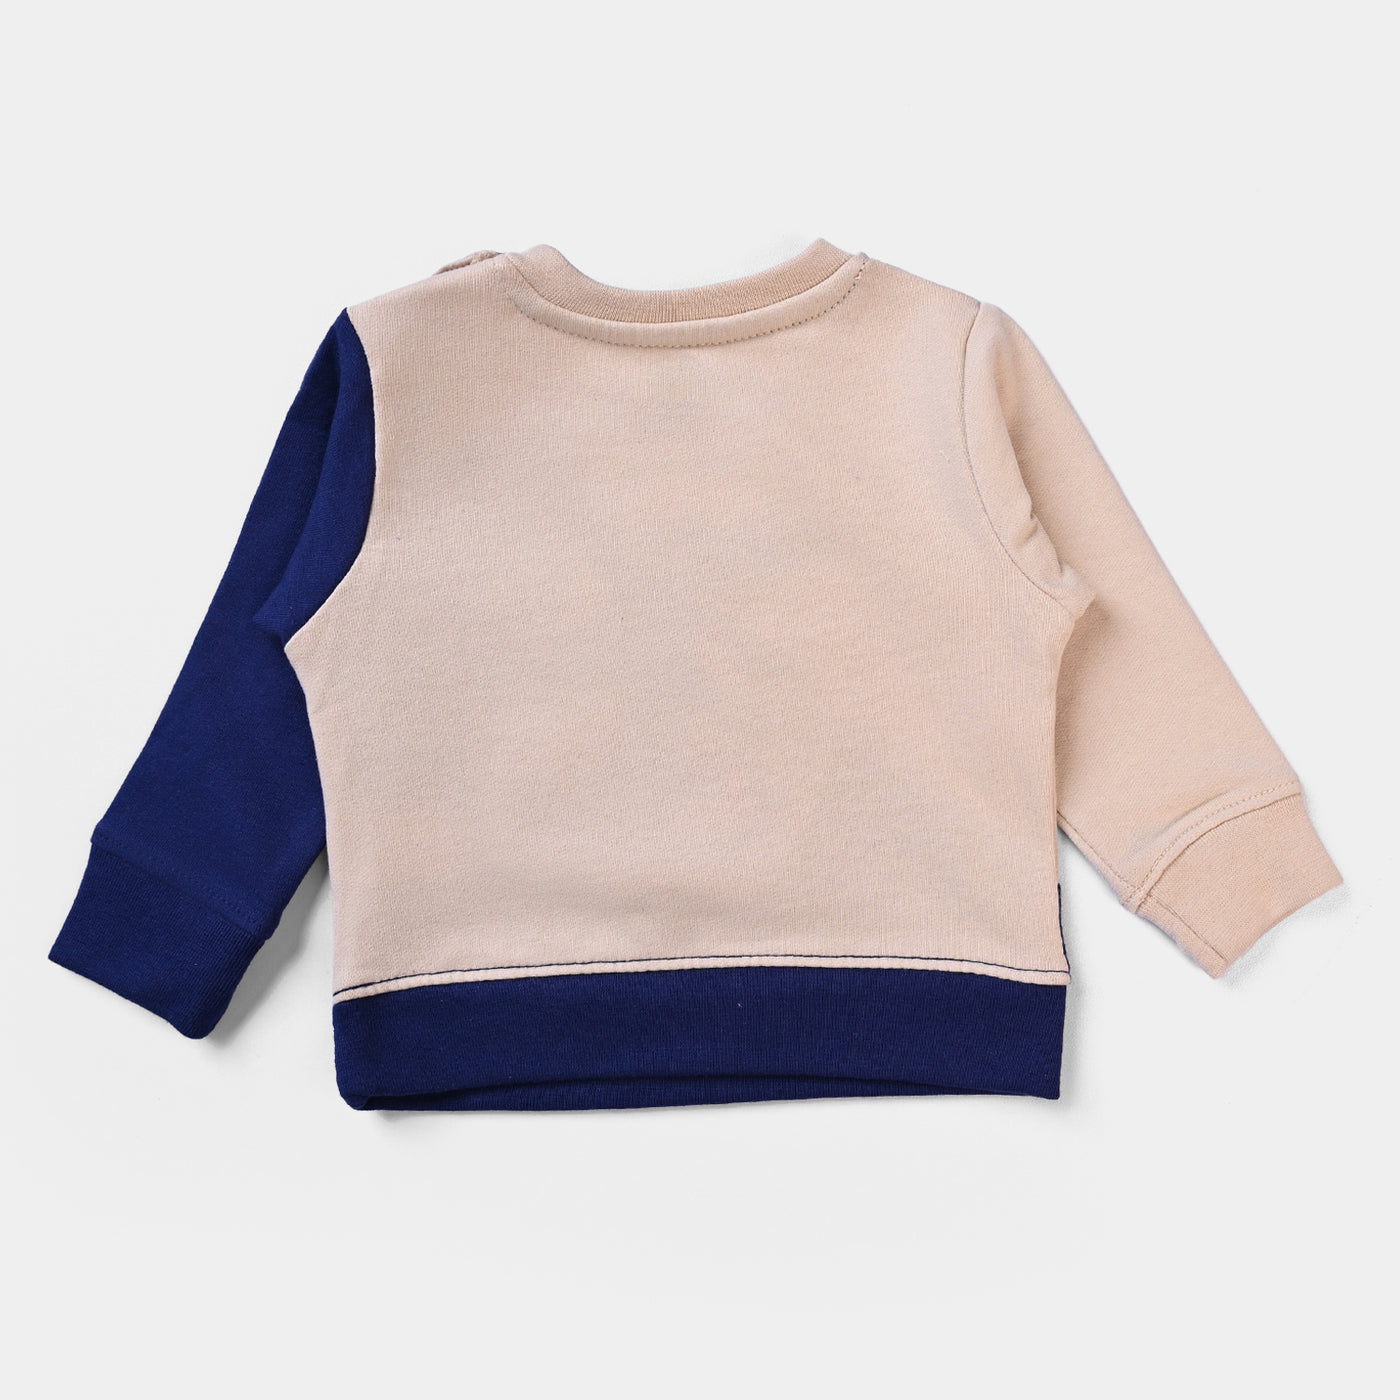 Infant Boy's Cotton Sweatshirt Dino-Navy Blue